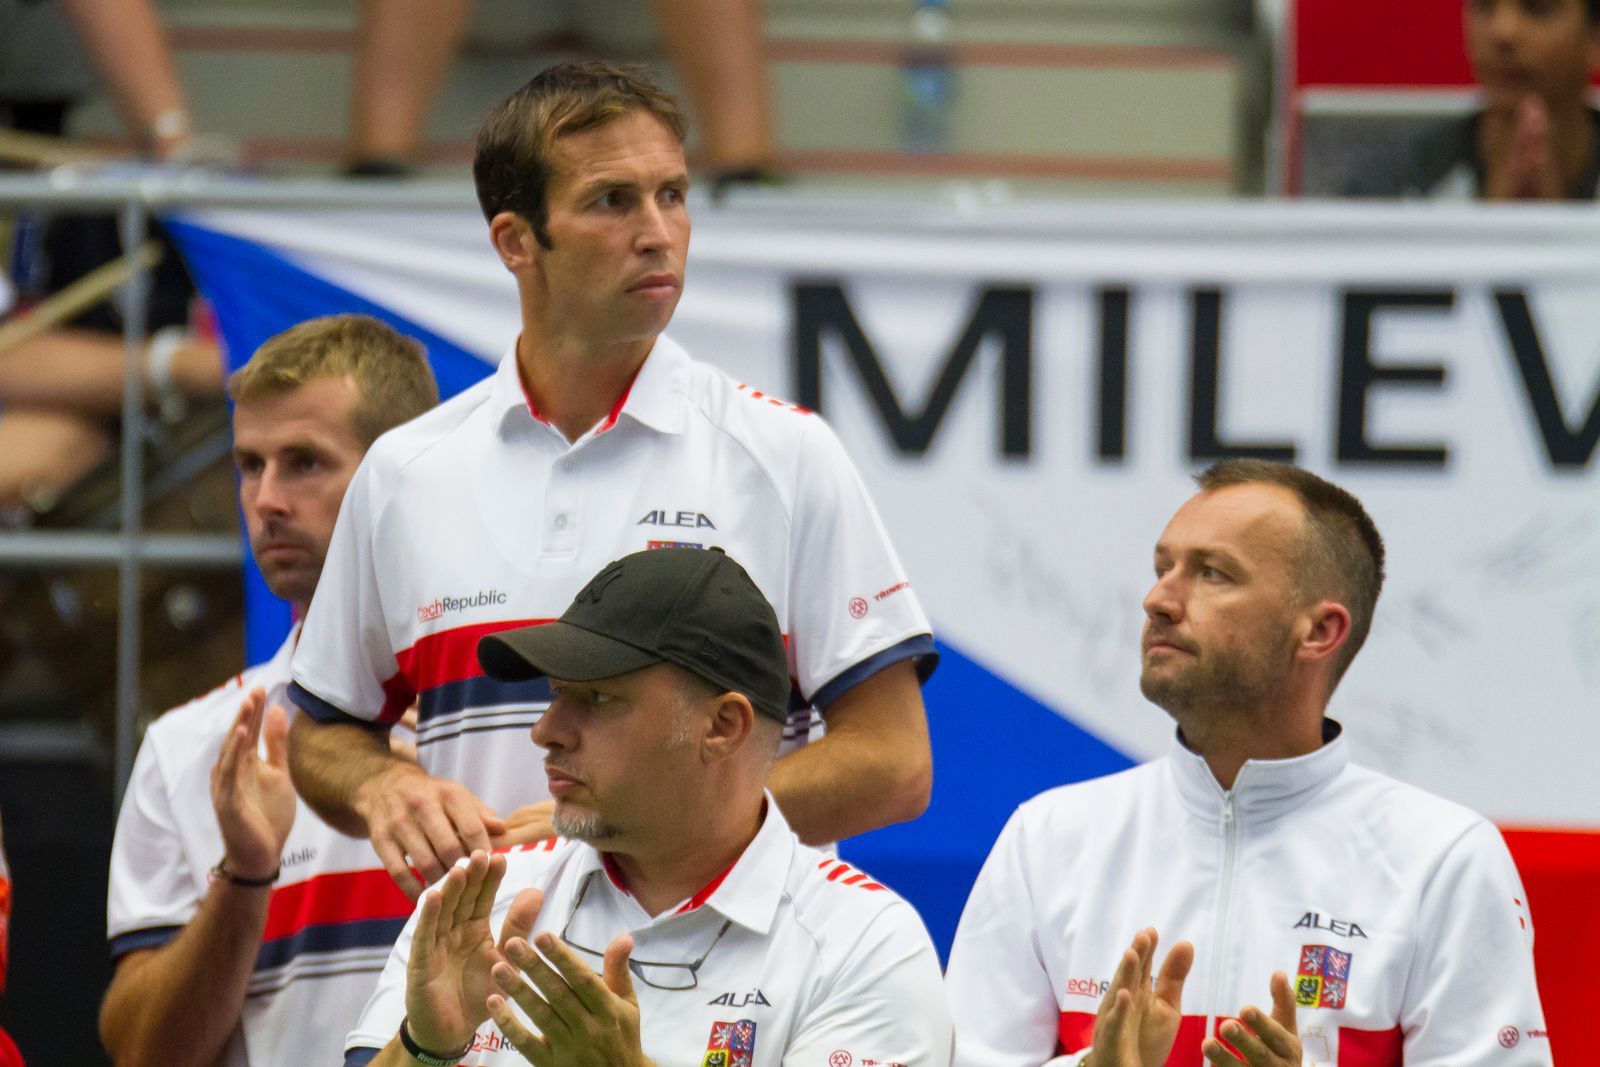 Davis Cup 2016 Česko vs. Francie: Lukáš Rosol - Jo-Wilfried Tsonga